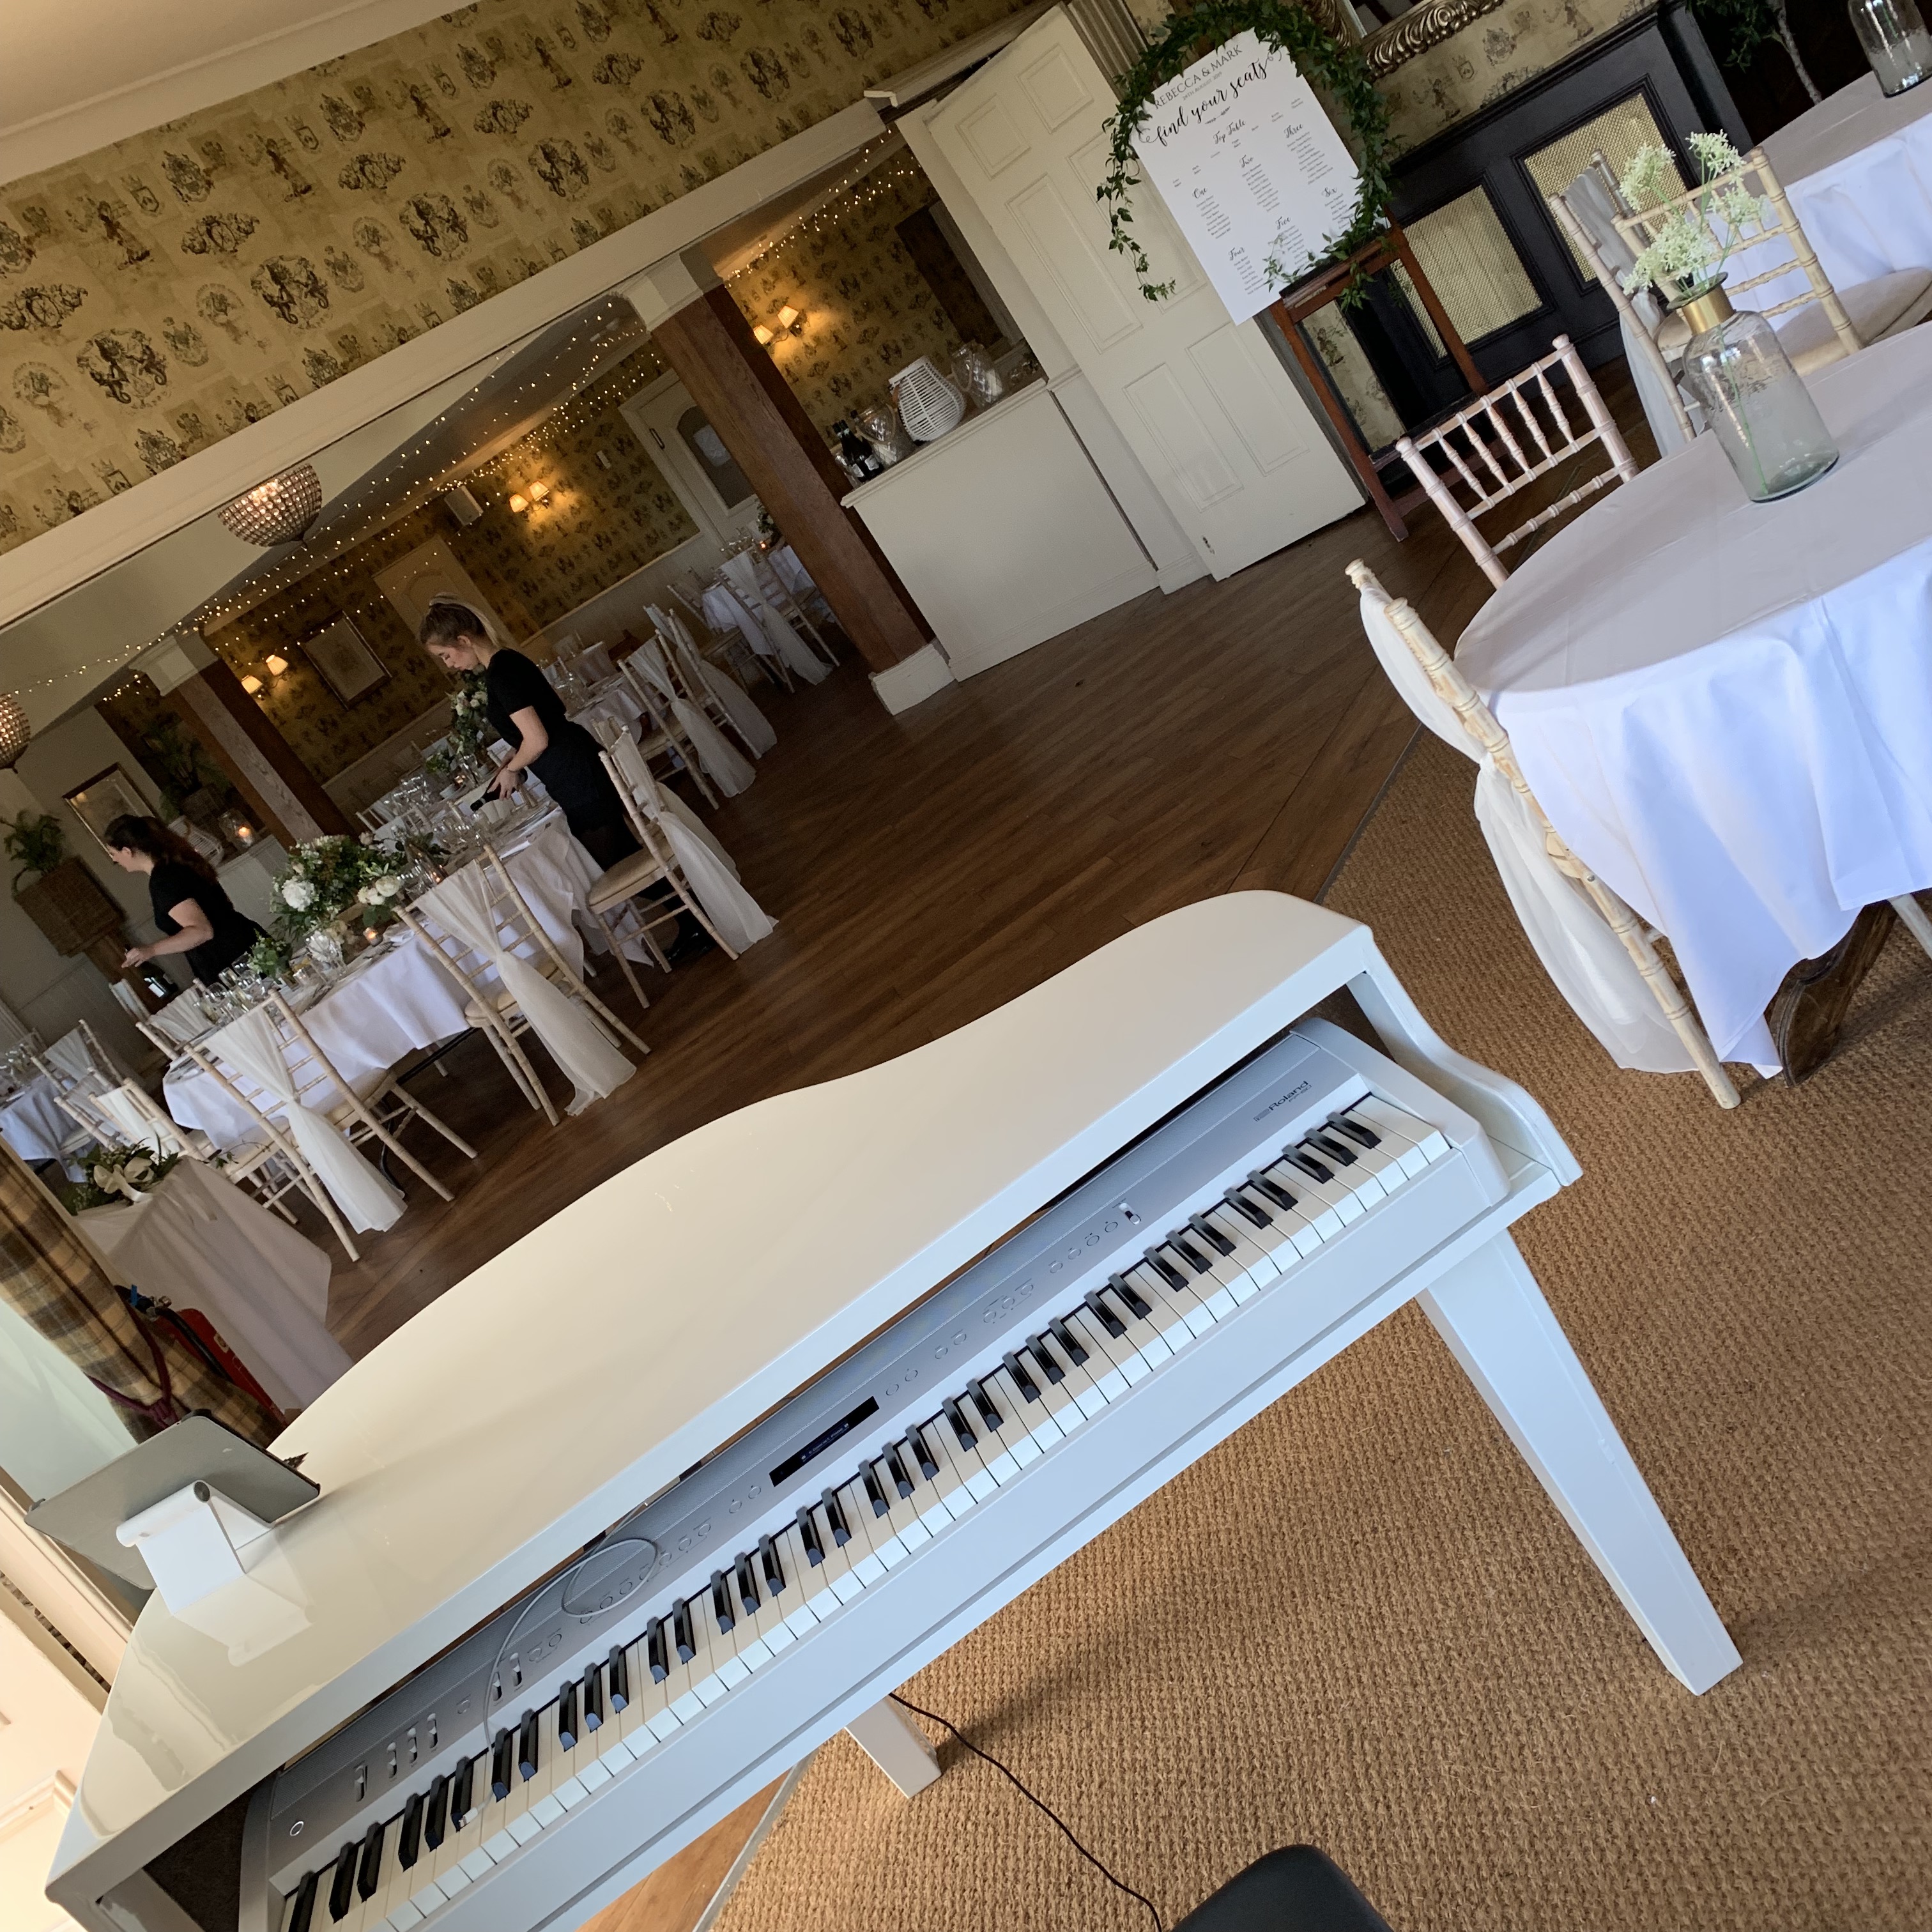 Craig Smith Wedding Pianist for Shireburn Arms Wedding Breakfasts